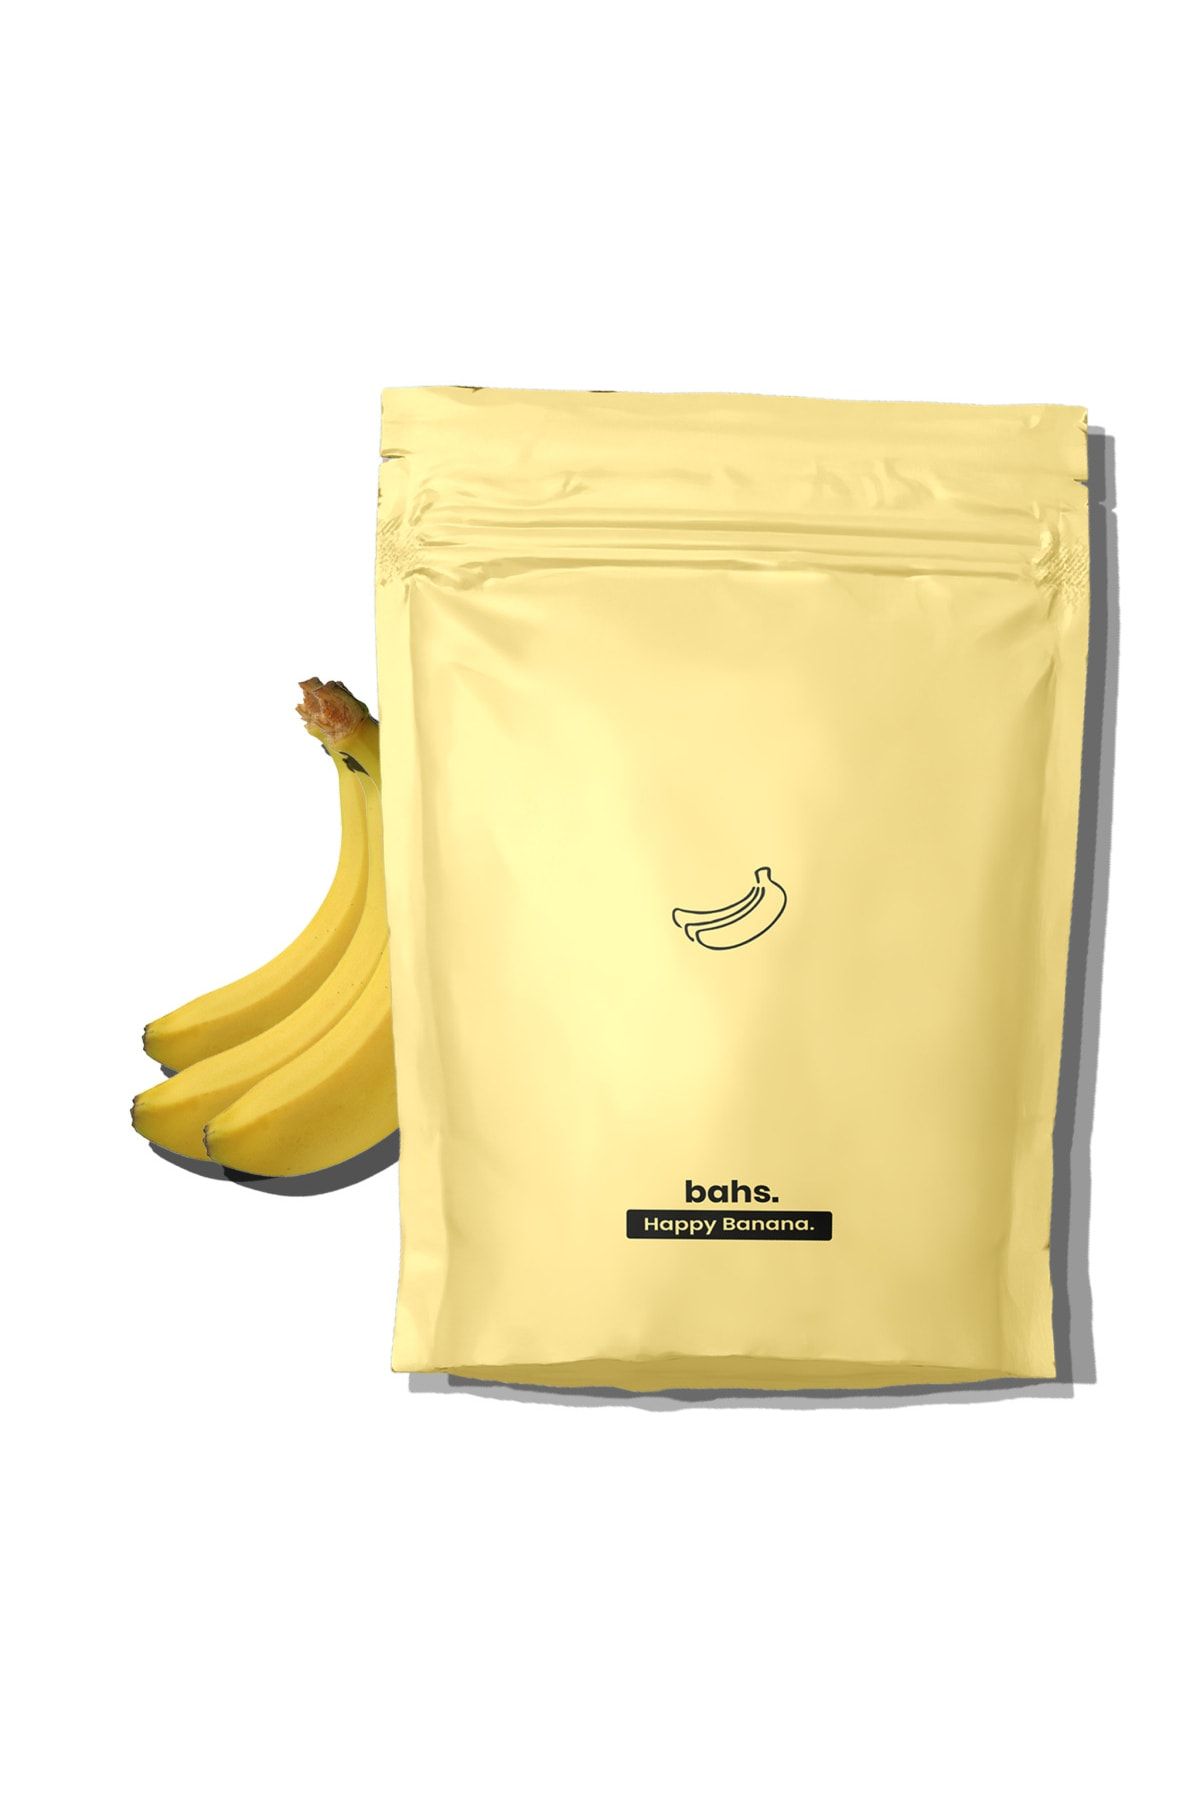 Bahs Proteinli Öğün Tozu - Happy Banana 600gr - 10 Servis